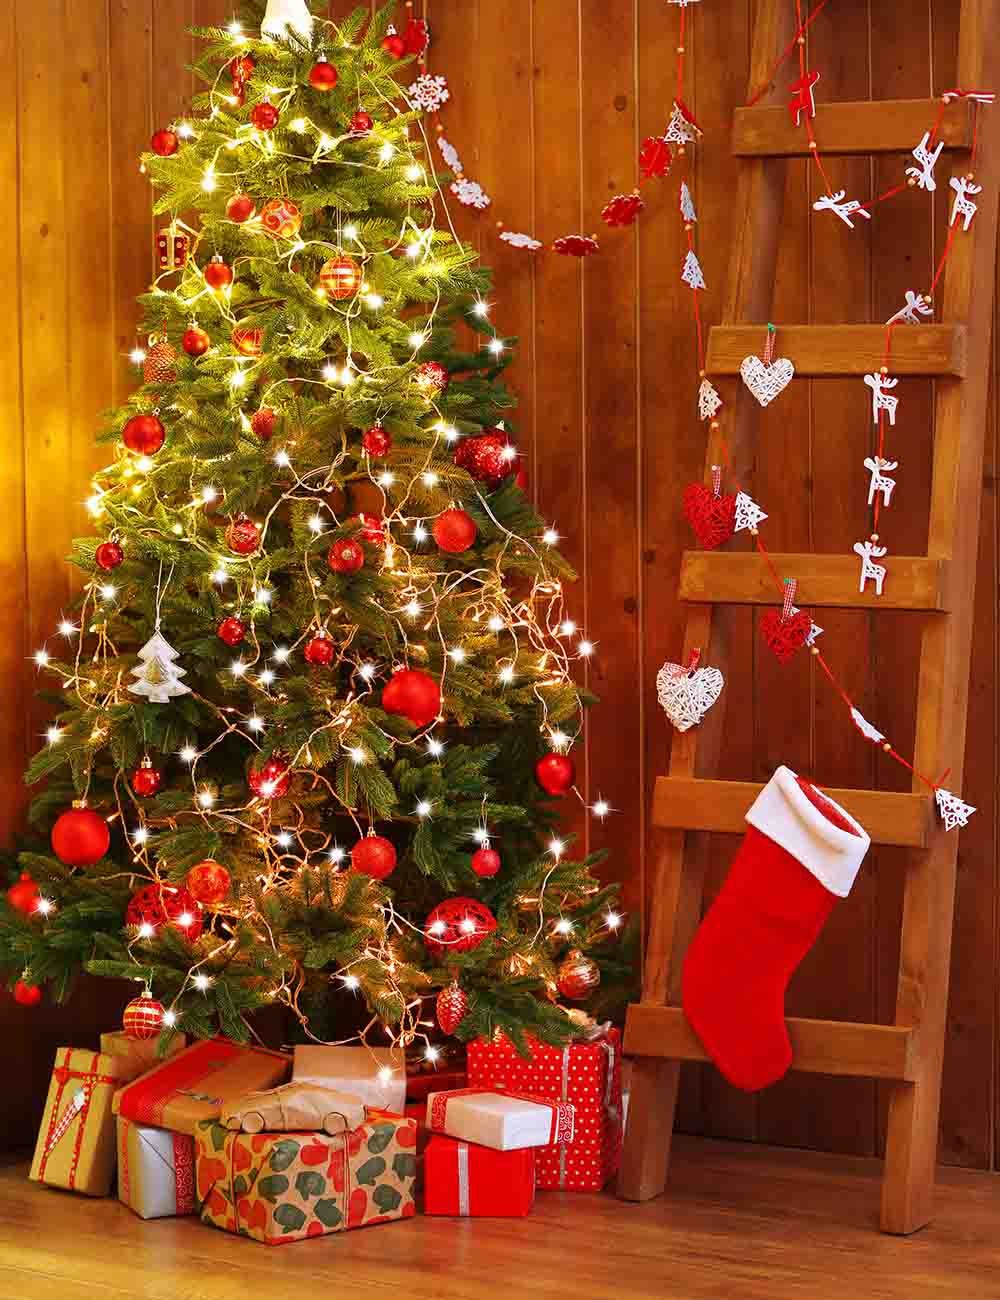 Christmas Stocks Hang On Ladder With Christmas Tree For Holiday Backdrop Shopbackdrop